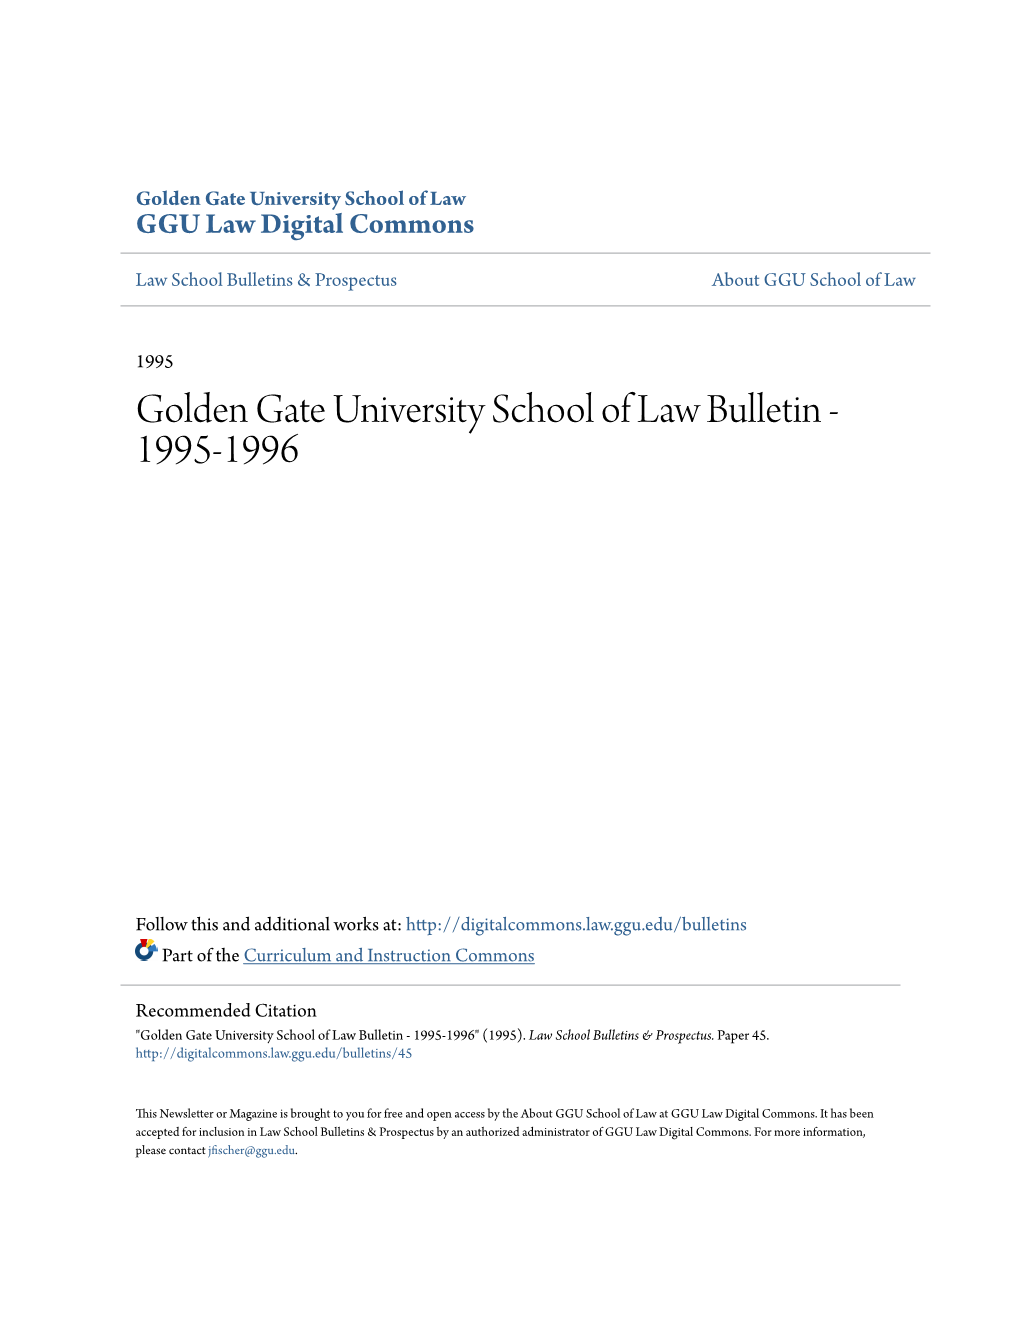 Golden Gate University School of Law Bulletin - 1995-1996